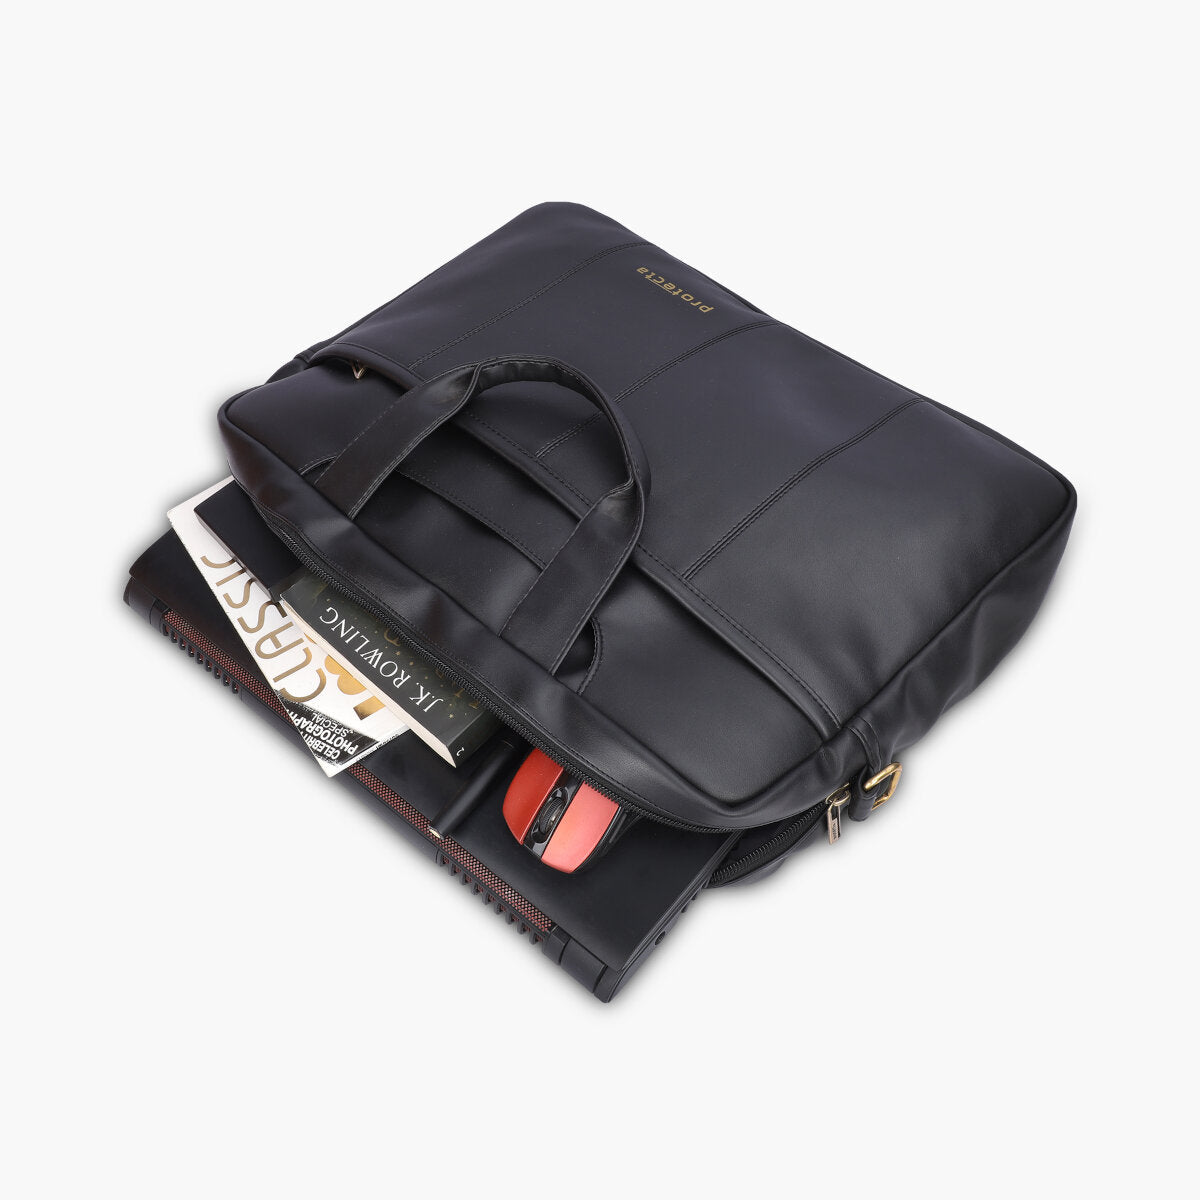 Black | Protecta Higher Ground Premium Office Laptop Bag-1